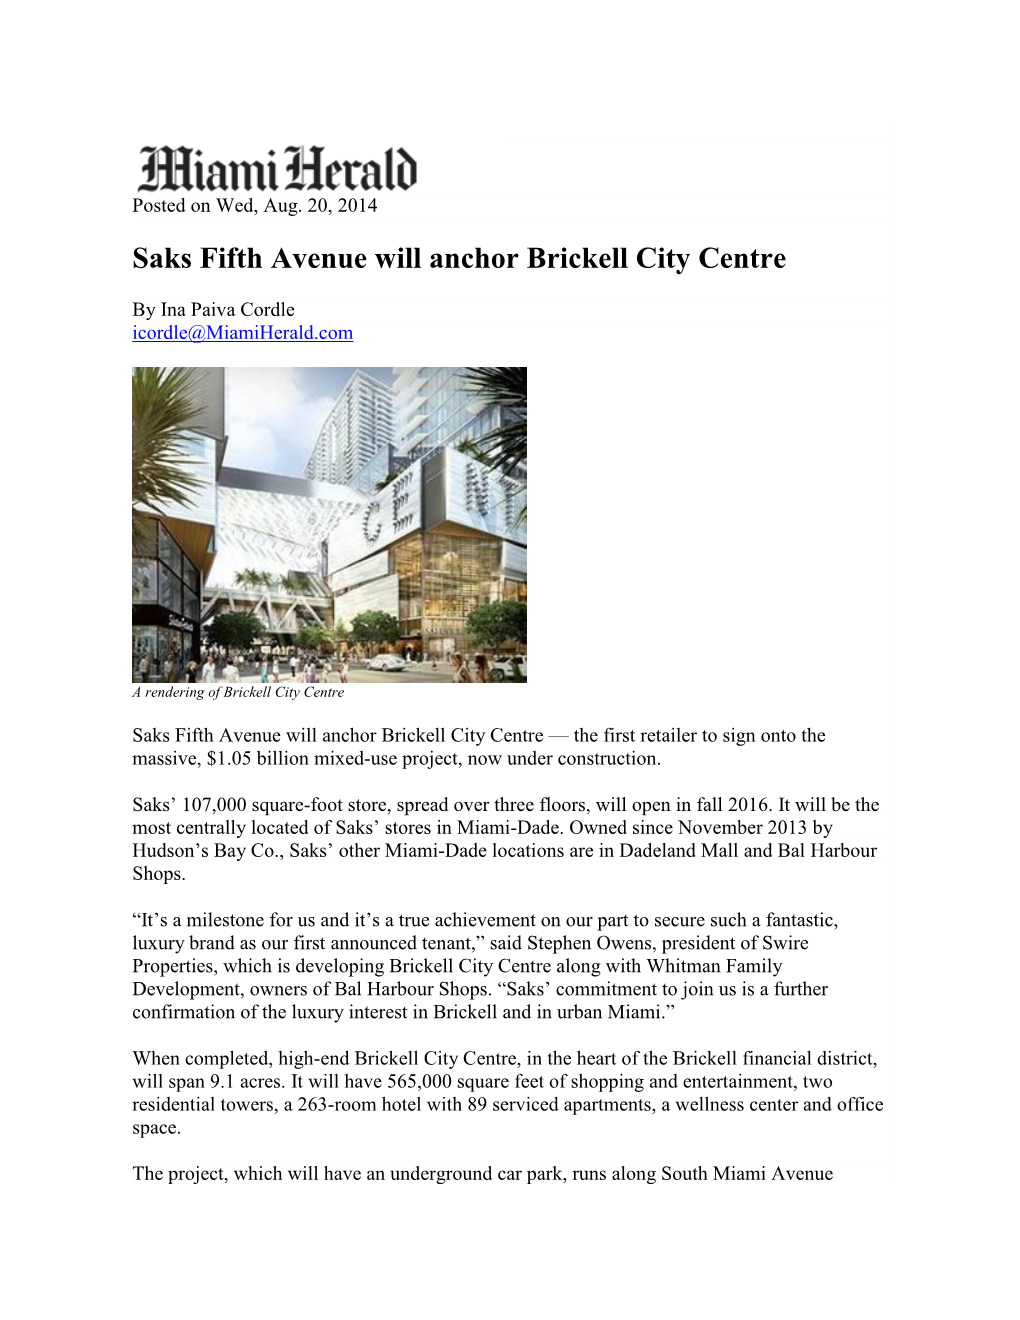 Saks Fifth Avenue Will Anchor Brickell City Centre